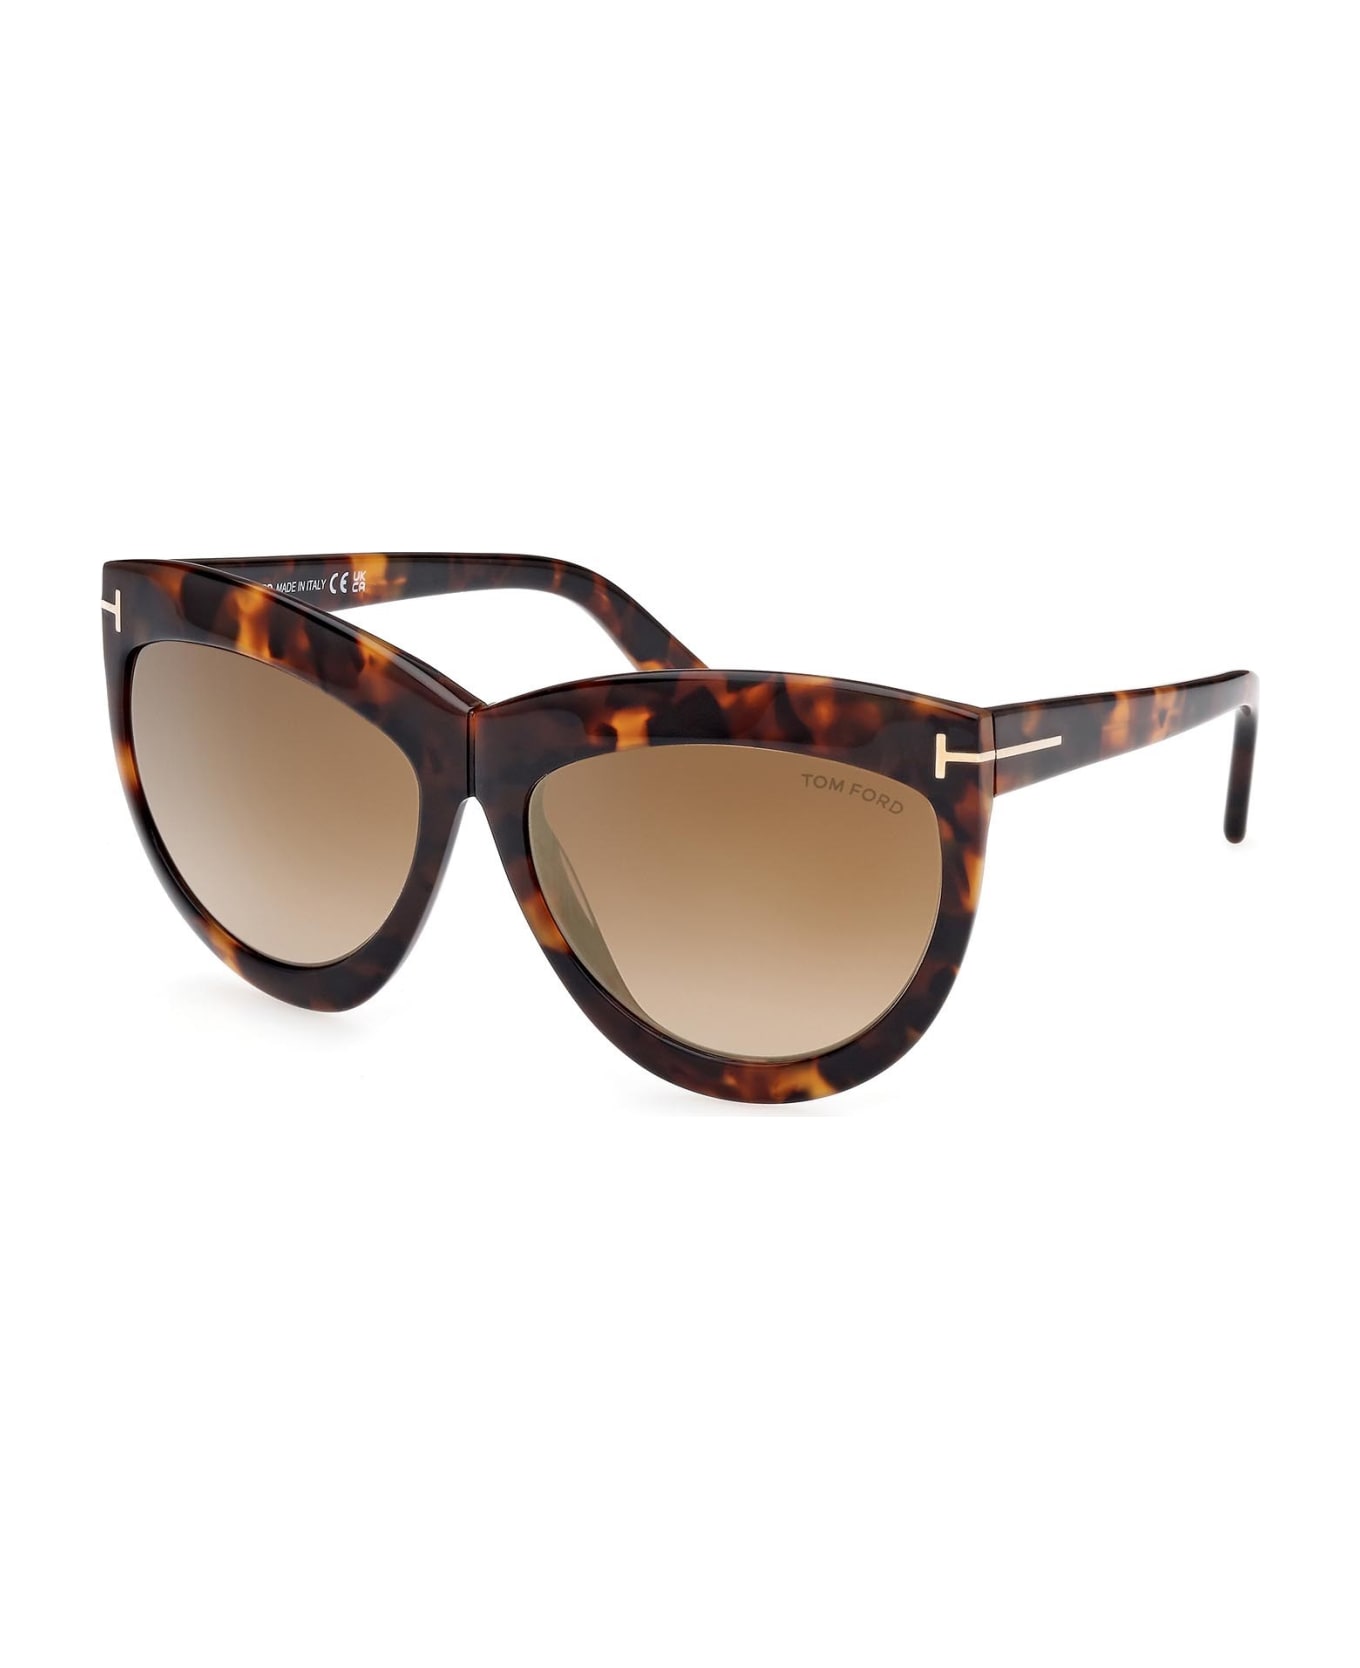 Tom Ford Eyewear Sunglasses - Havana/Marrone sfumato サングラス